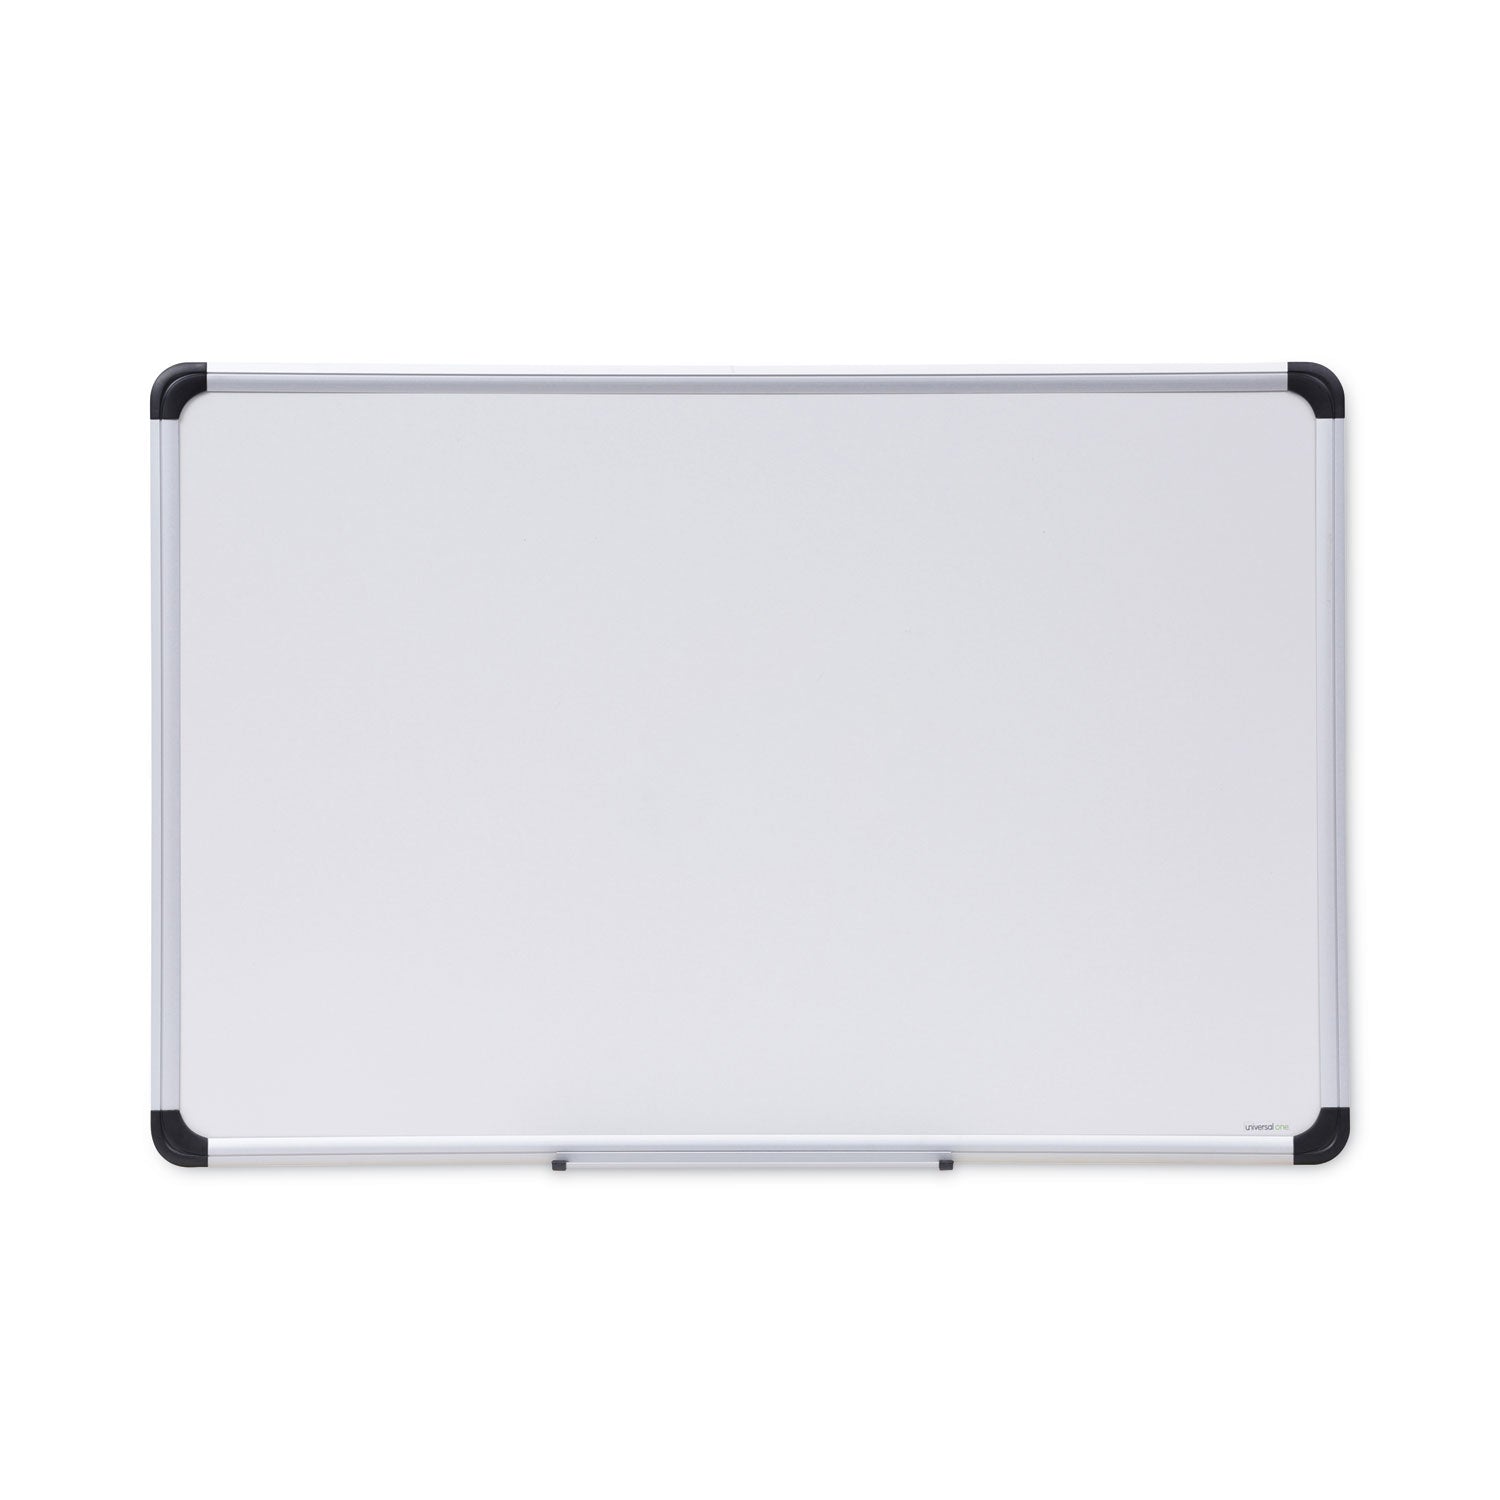 Deluxe Porcelain Magnetic Dry Erase Board, 36 x 24, White Surface, Silver/Black Aluminum Frame - 